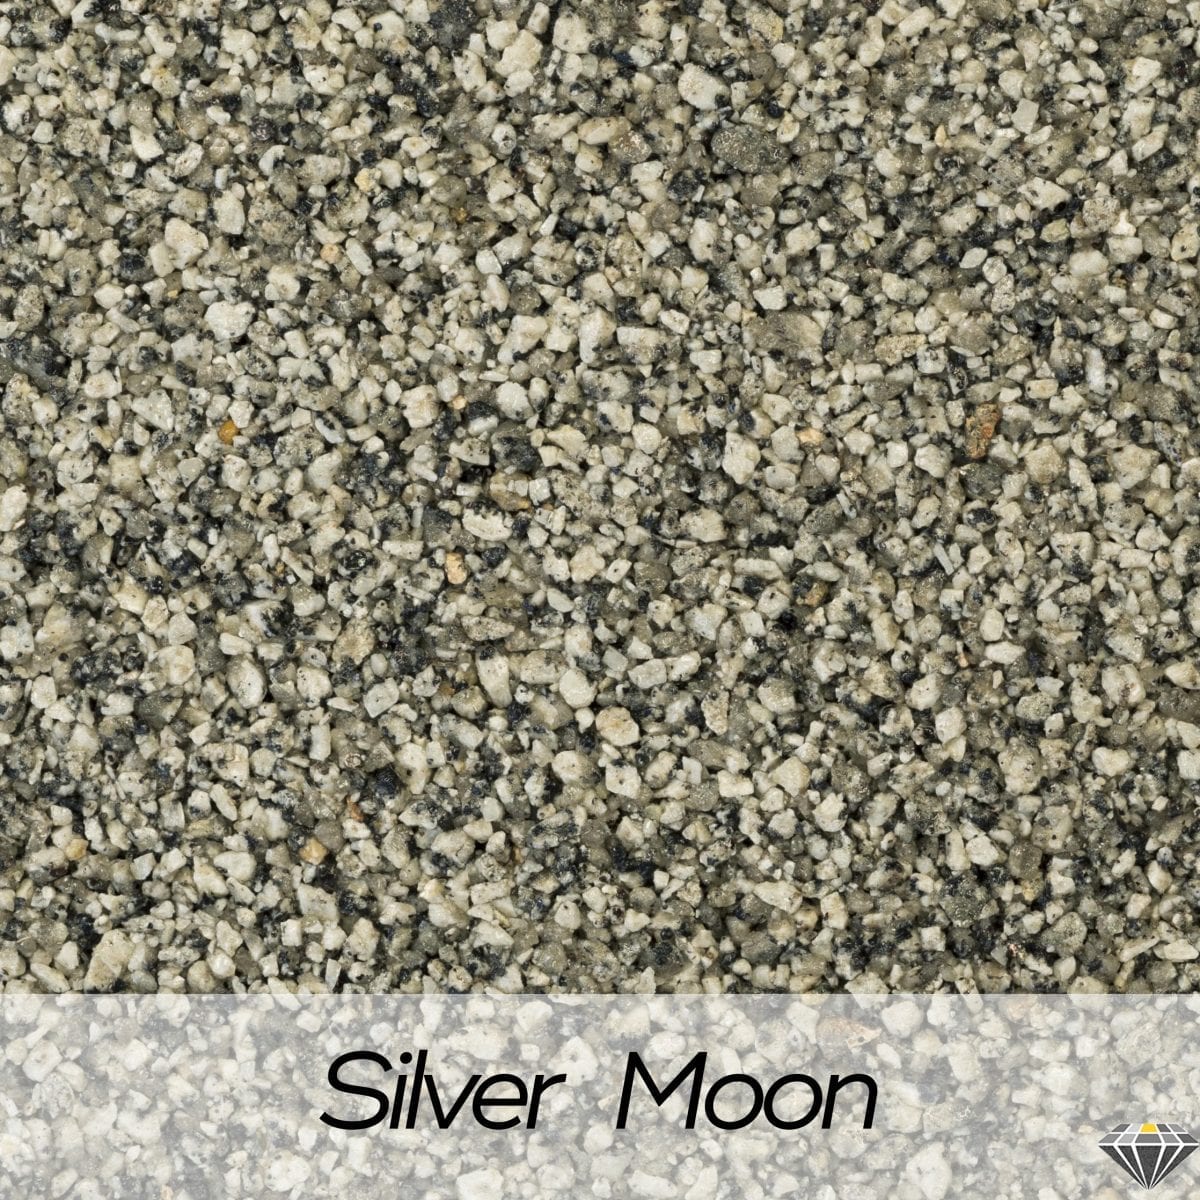 Silver Moon Resin